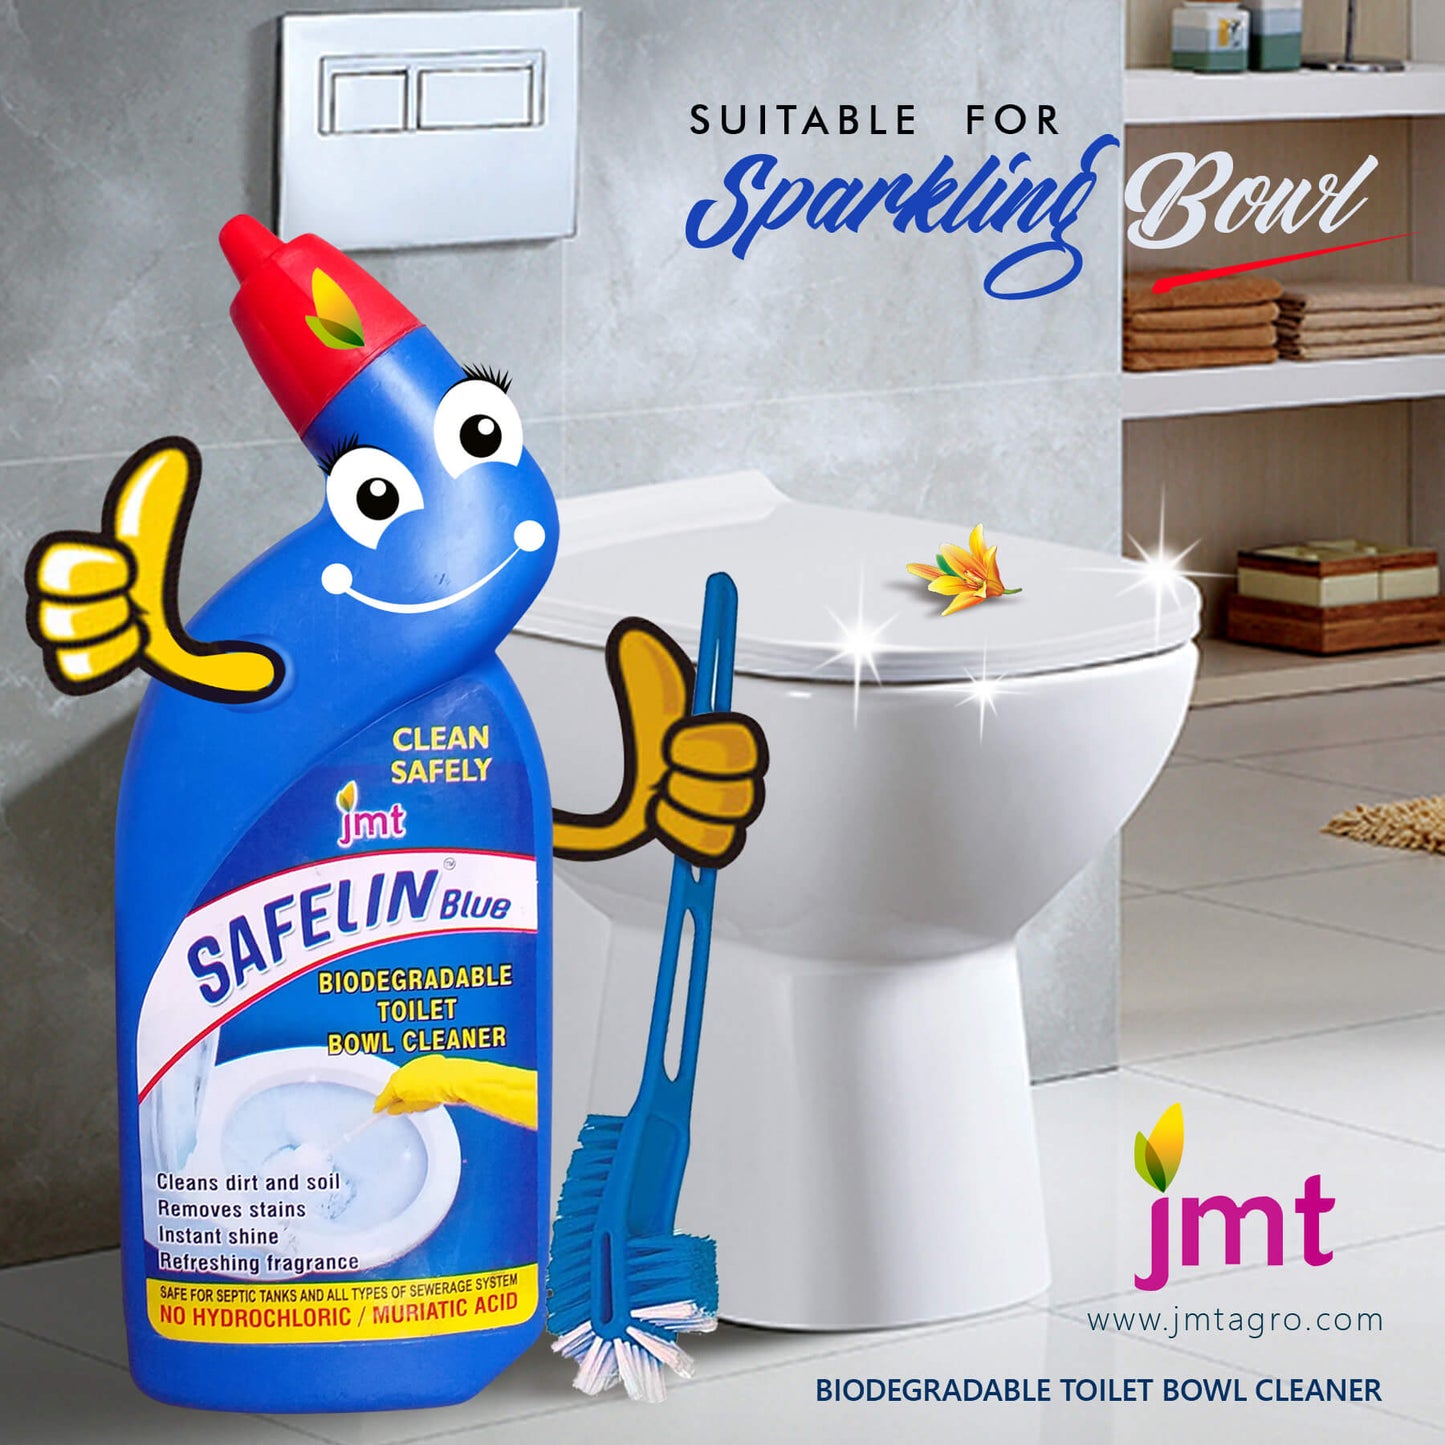 1500ml Eco-friendly Safelin Blue Toilet Bowl Cleaner (3x500ml)+1500ml Chlorine Free Safelin Red Bathroom Cleaner (3x500ml) + Free Shipping